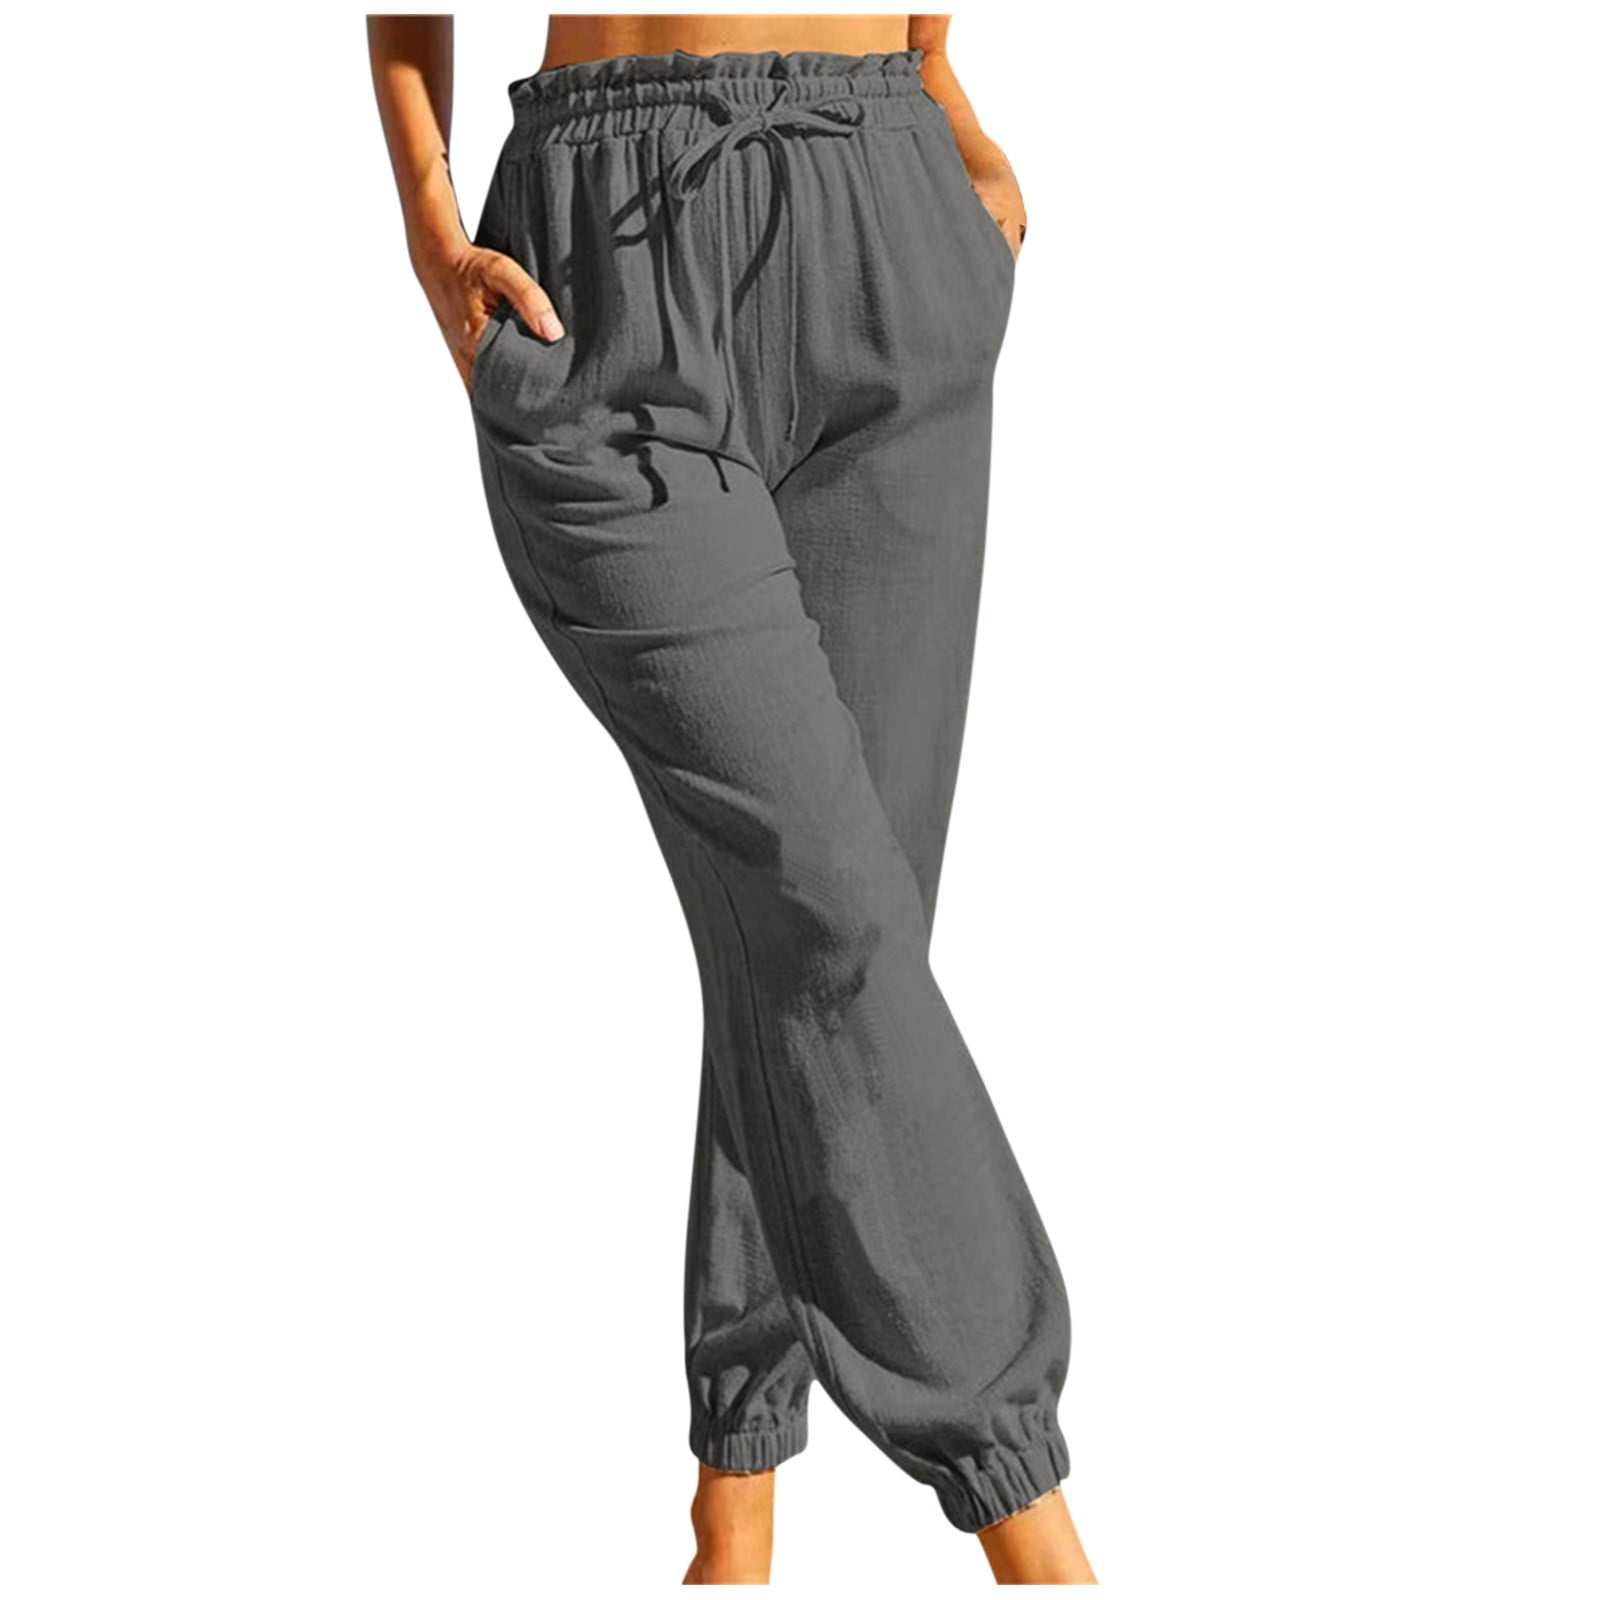 Buy Koton Women Black Solid Plain Comfortable Pant online